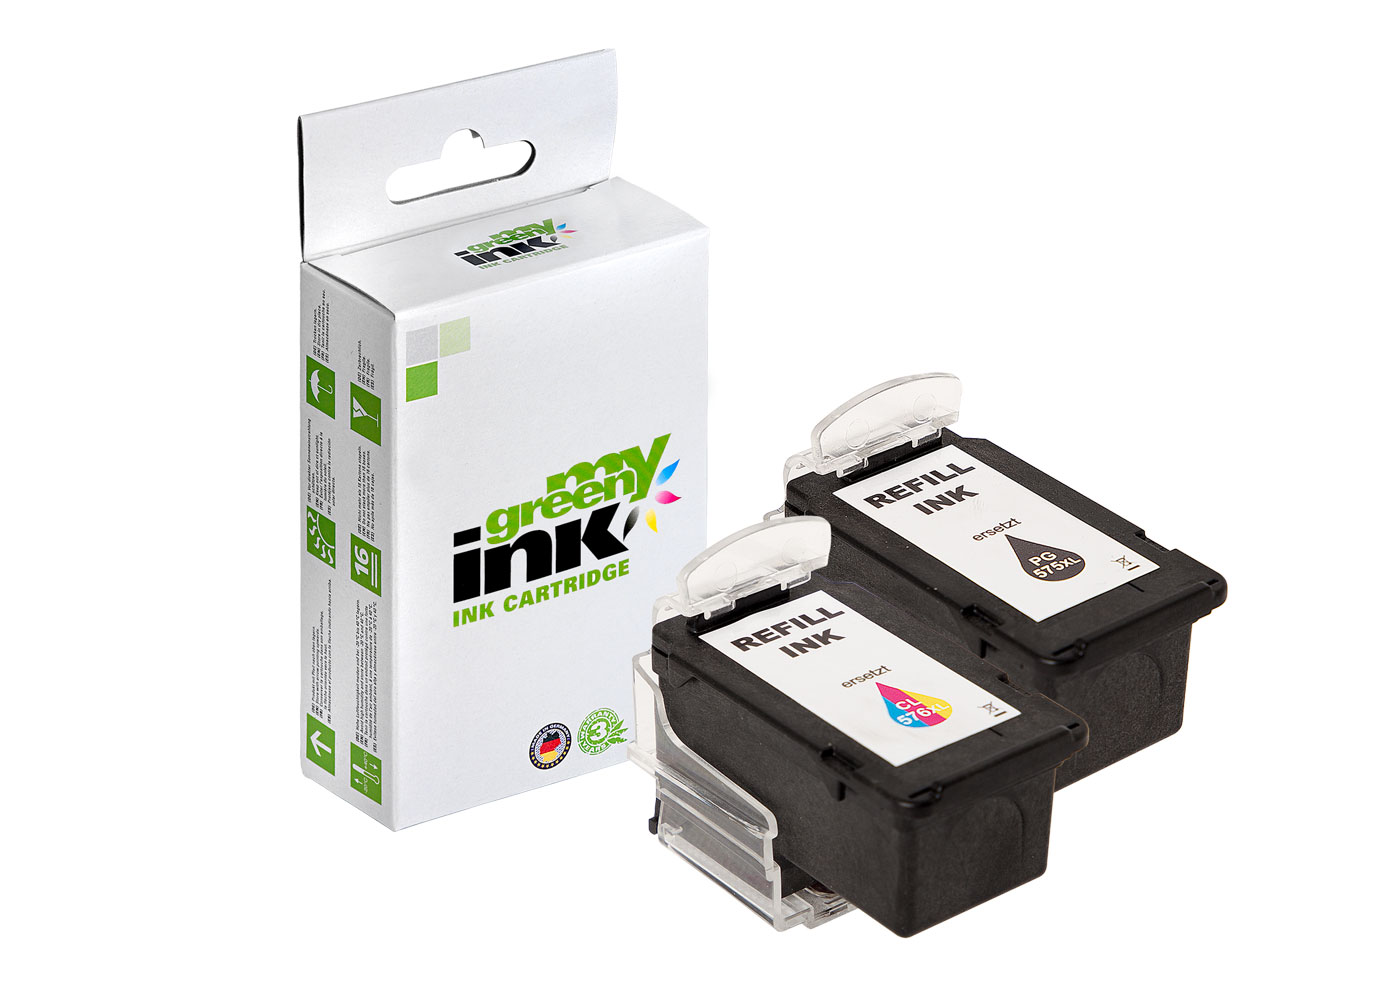 Refill ink cartridge for Canon Pixma TR 4750, TS 3550 a. o.